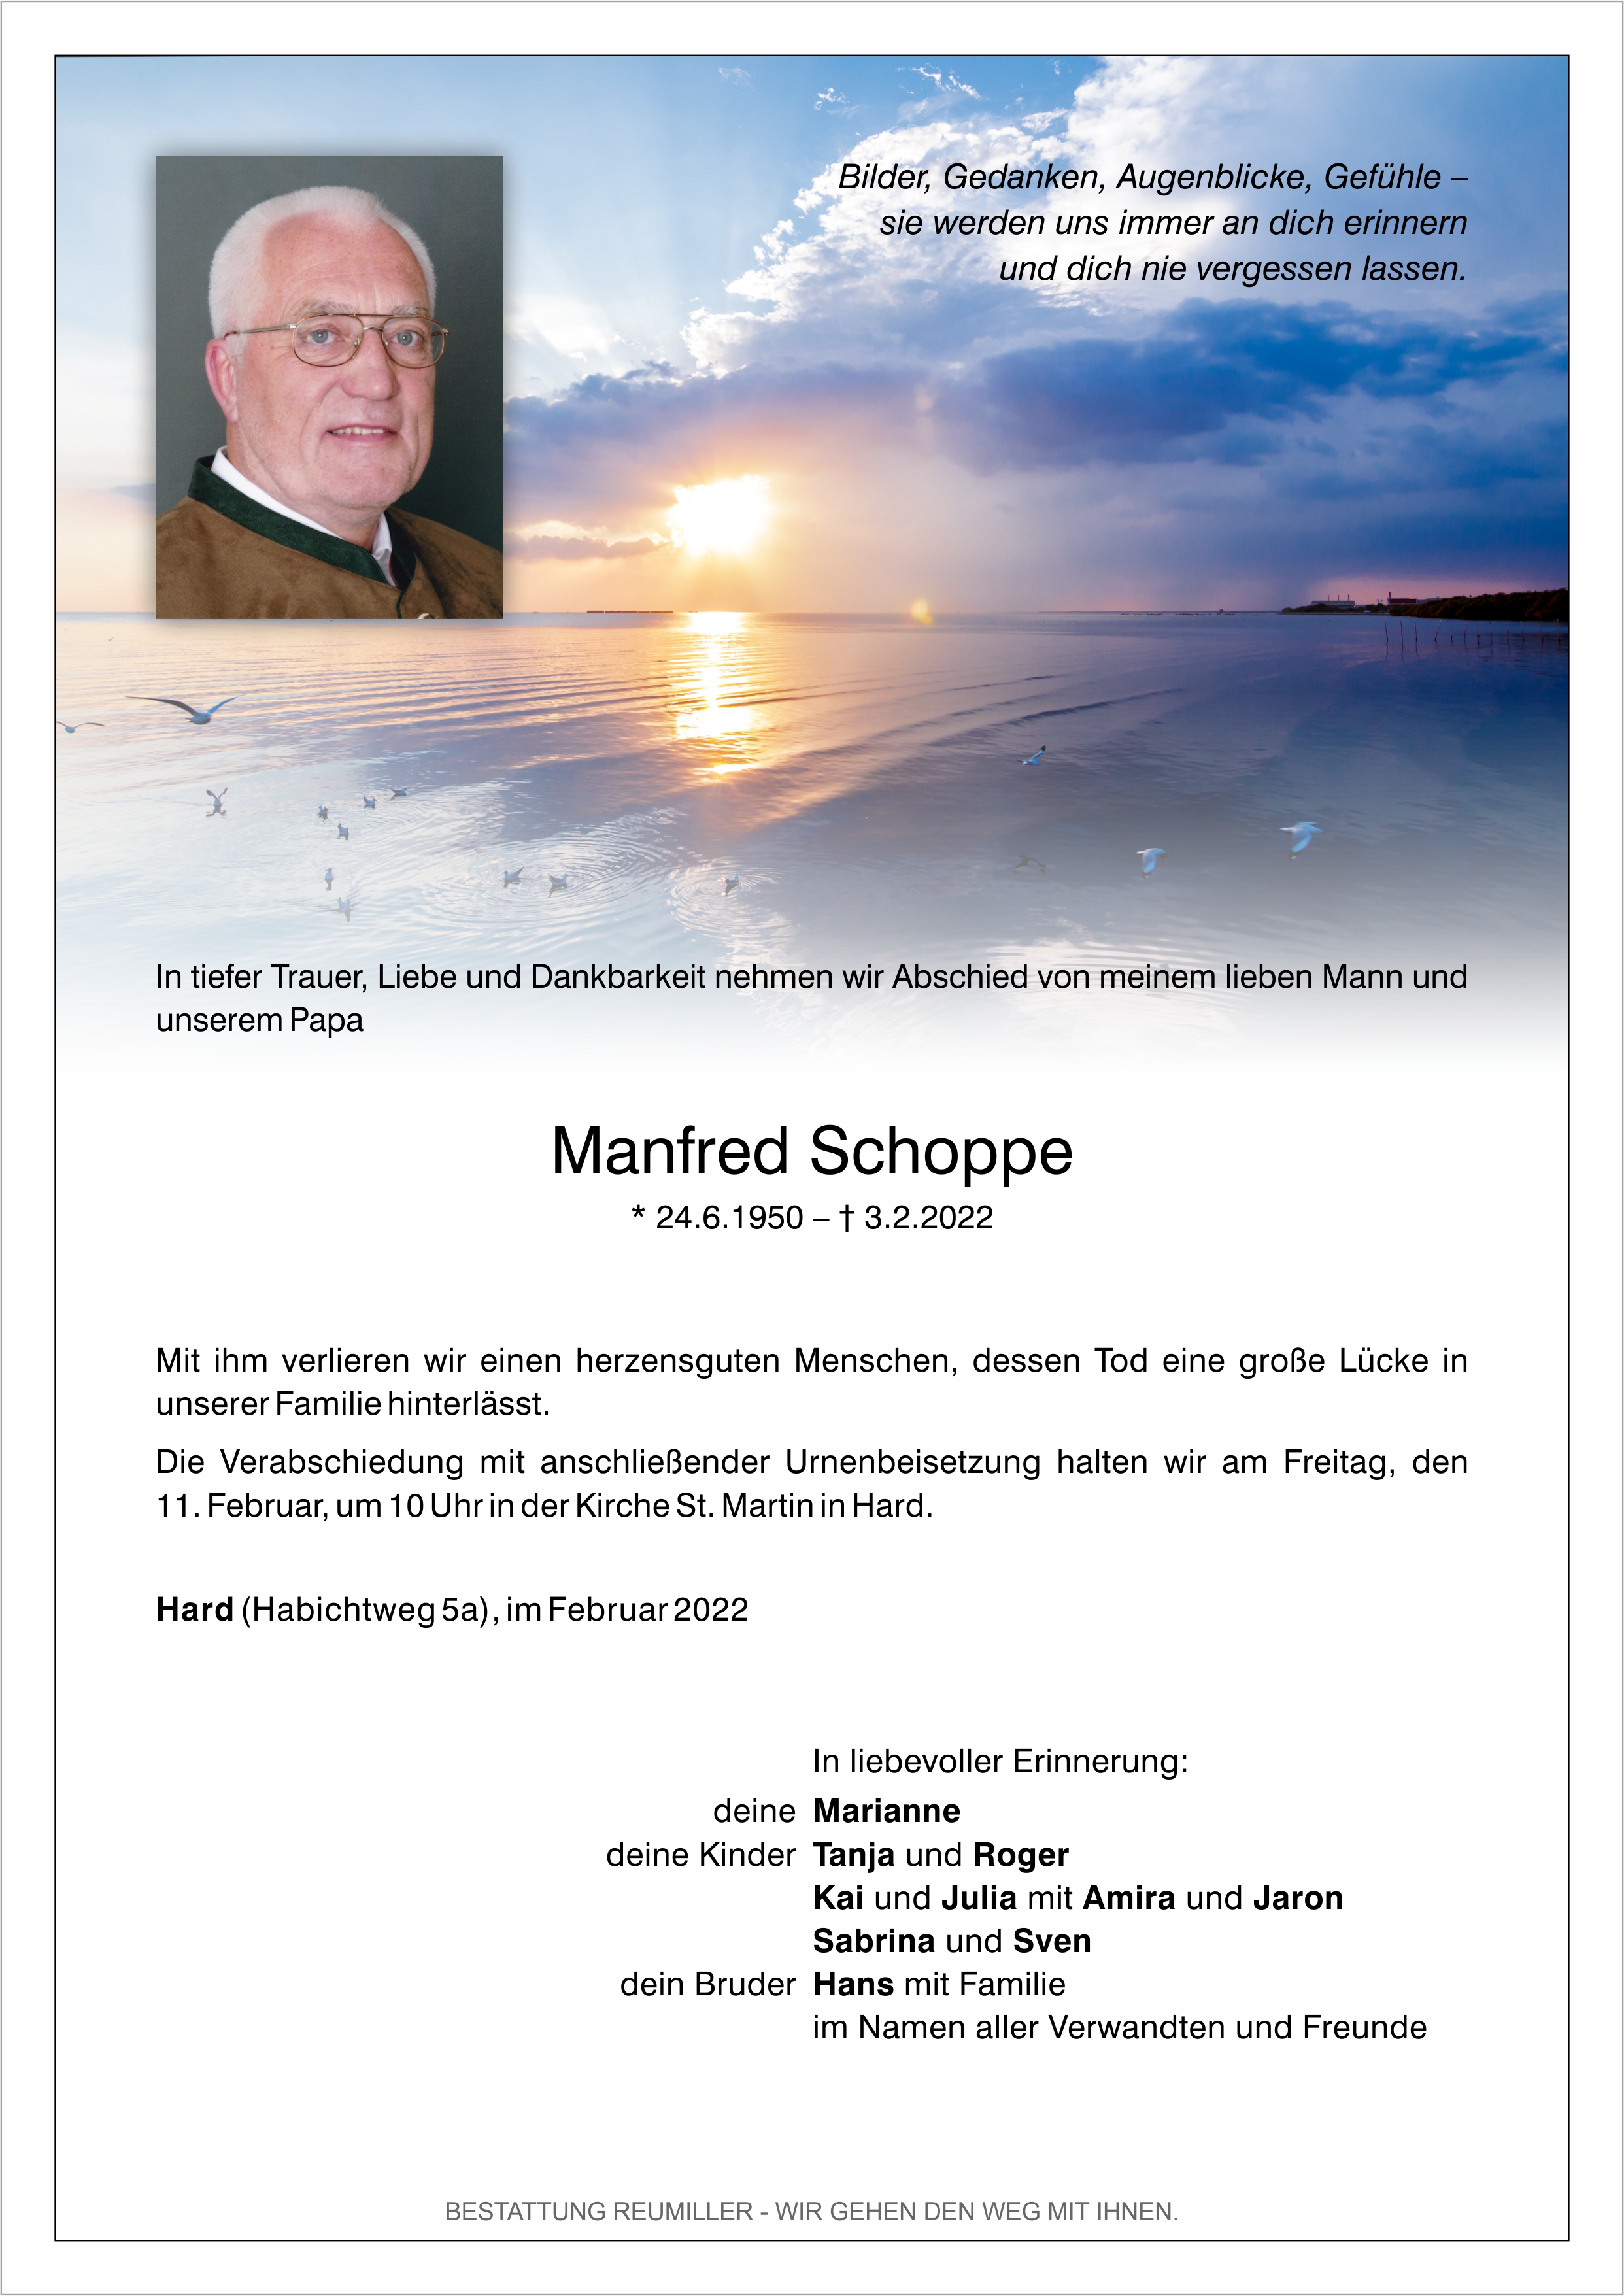 Manfred Schoppe